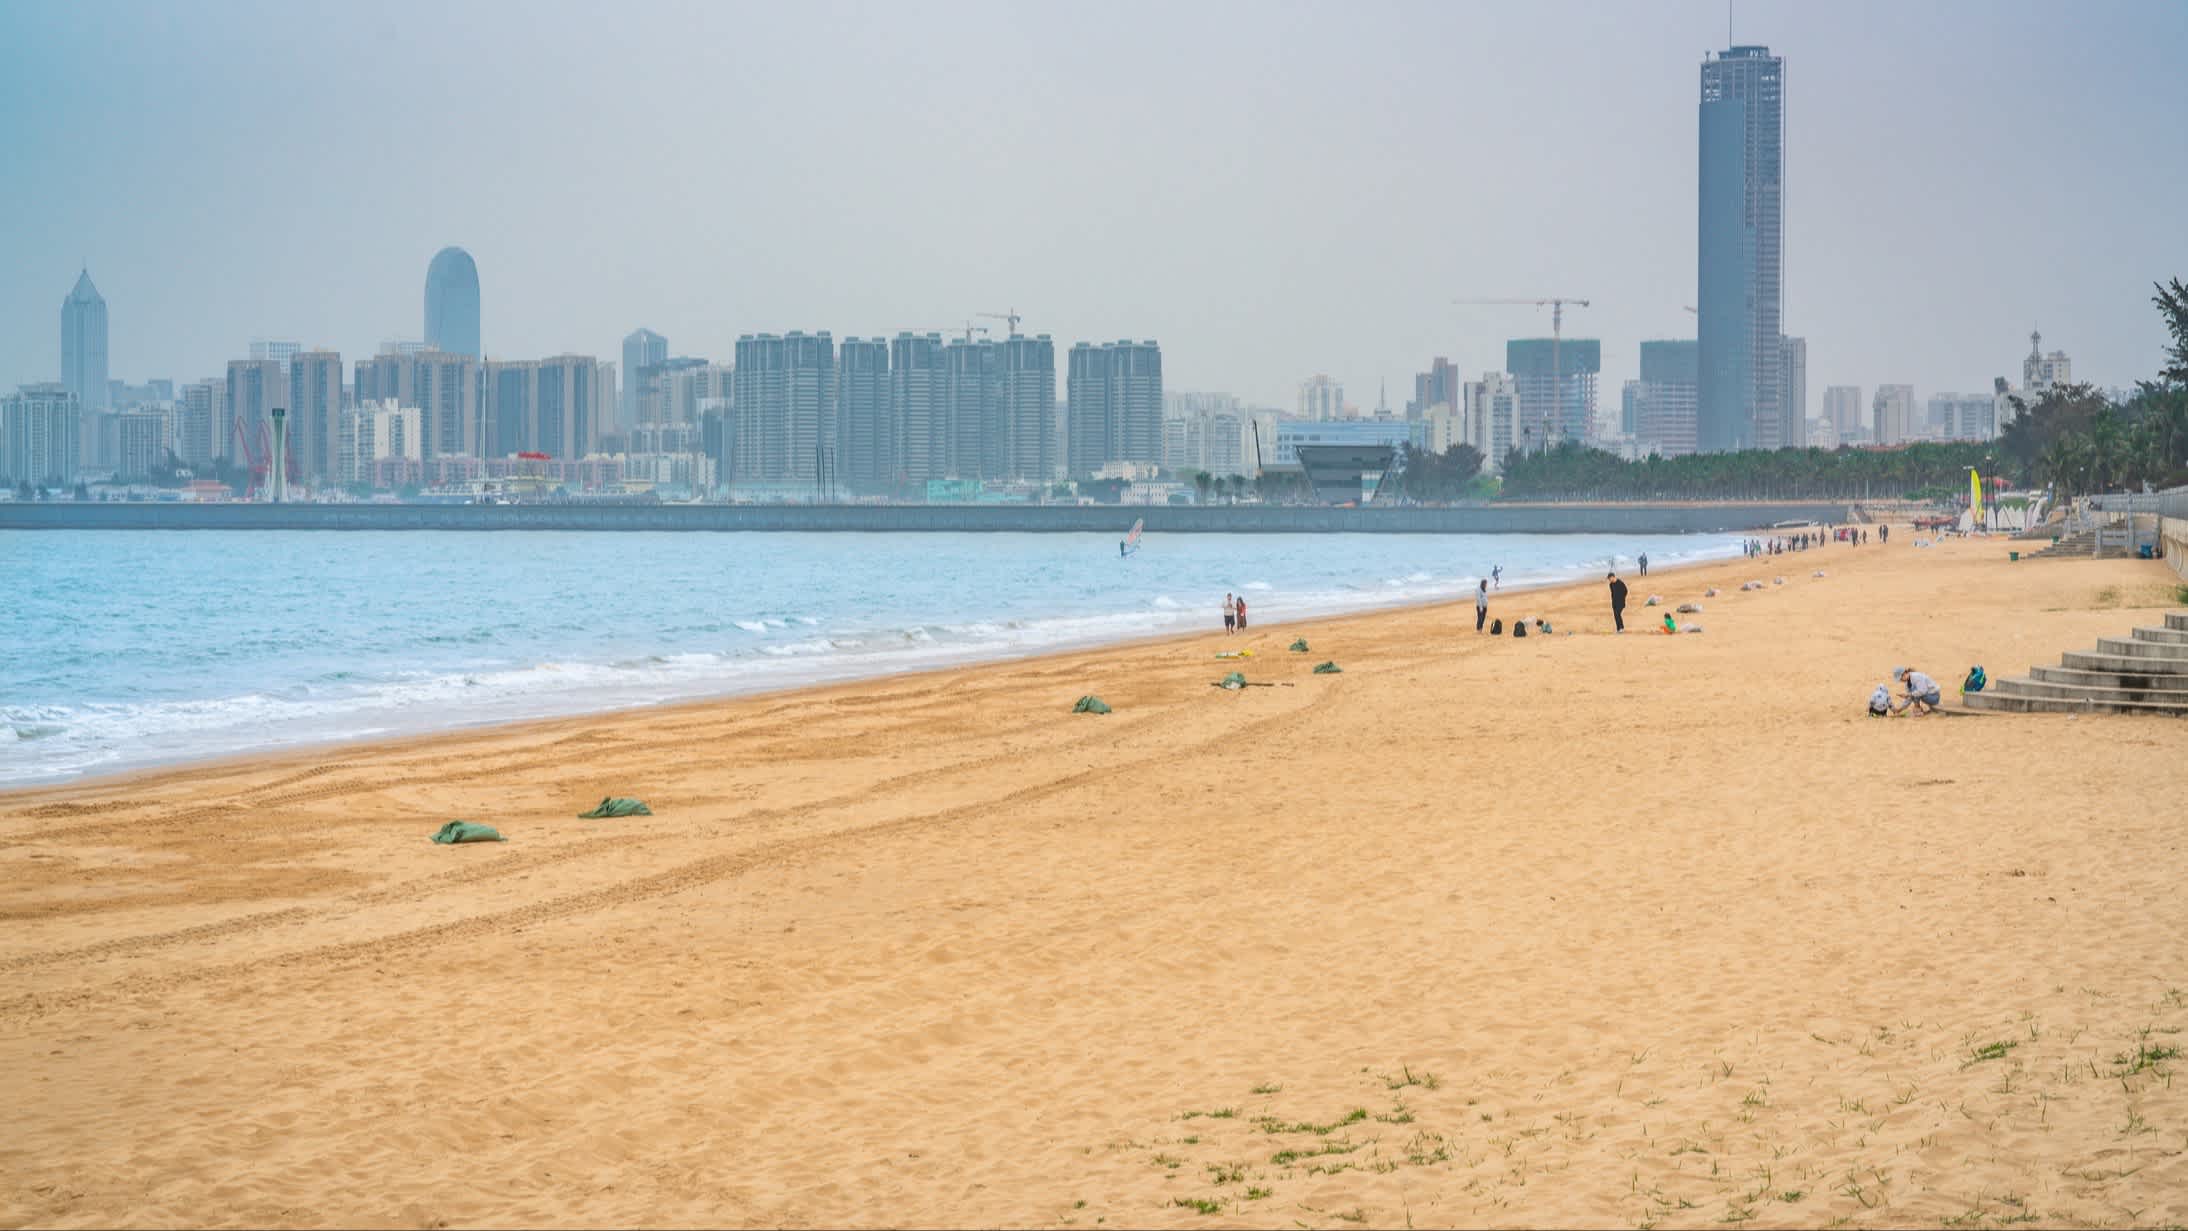 Haikou Xixiu (Holiday Beach) Strandblick in Haikou, Hainan, China mit goldenem Sand und Hochhäusern im Bild.

